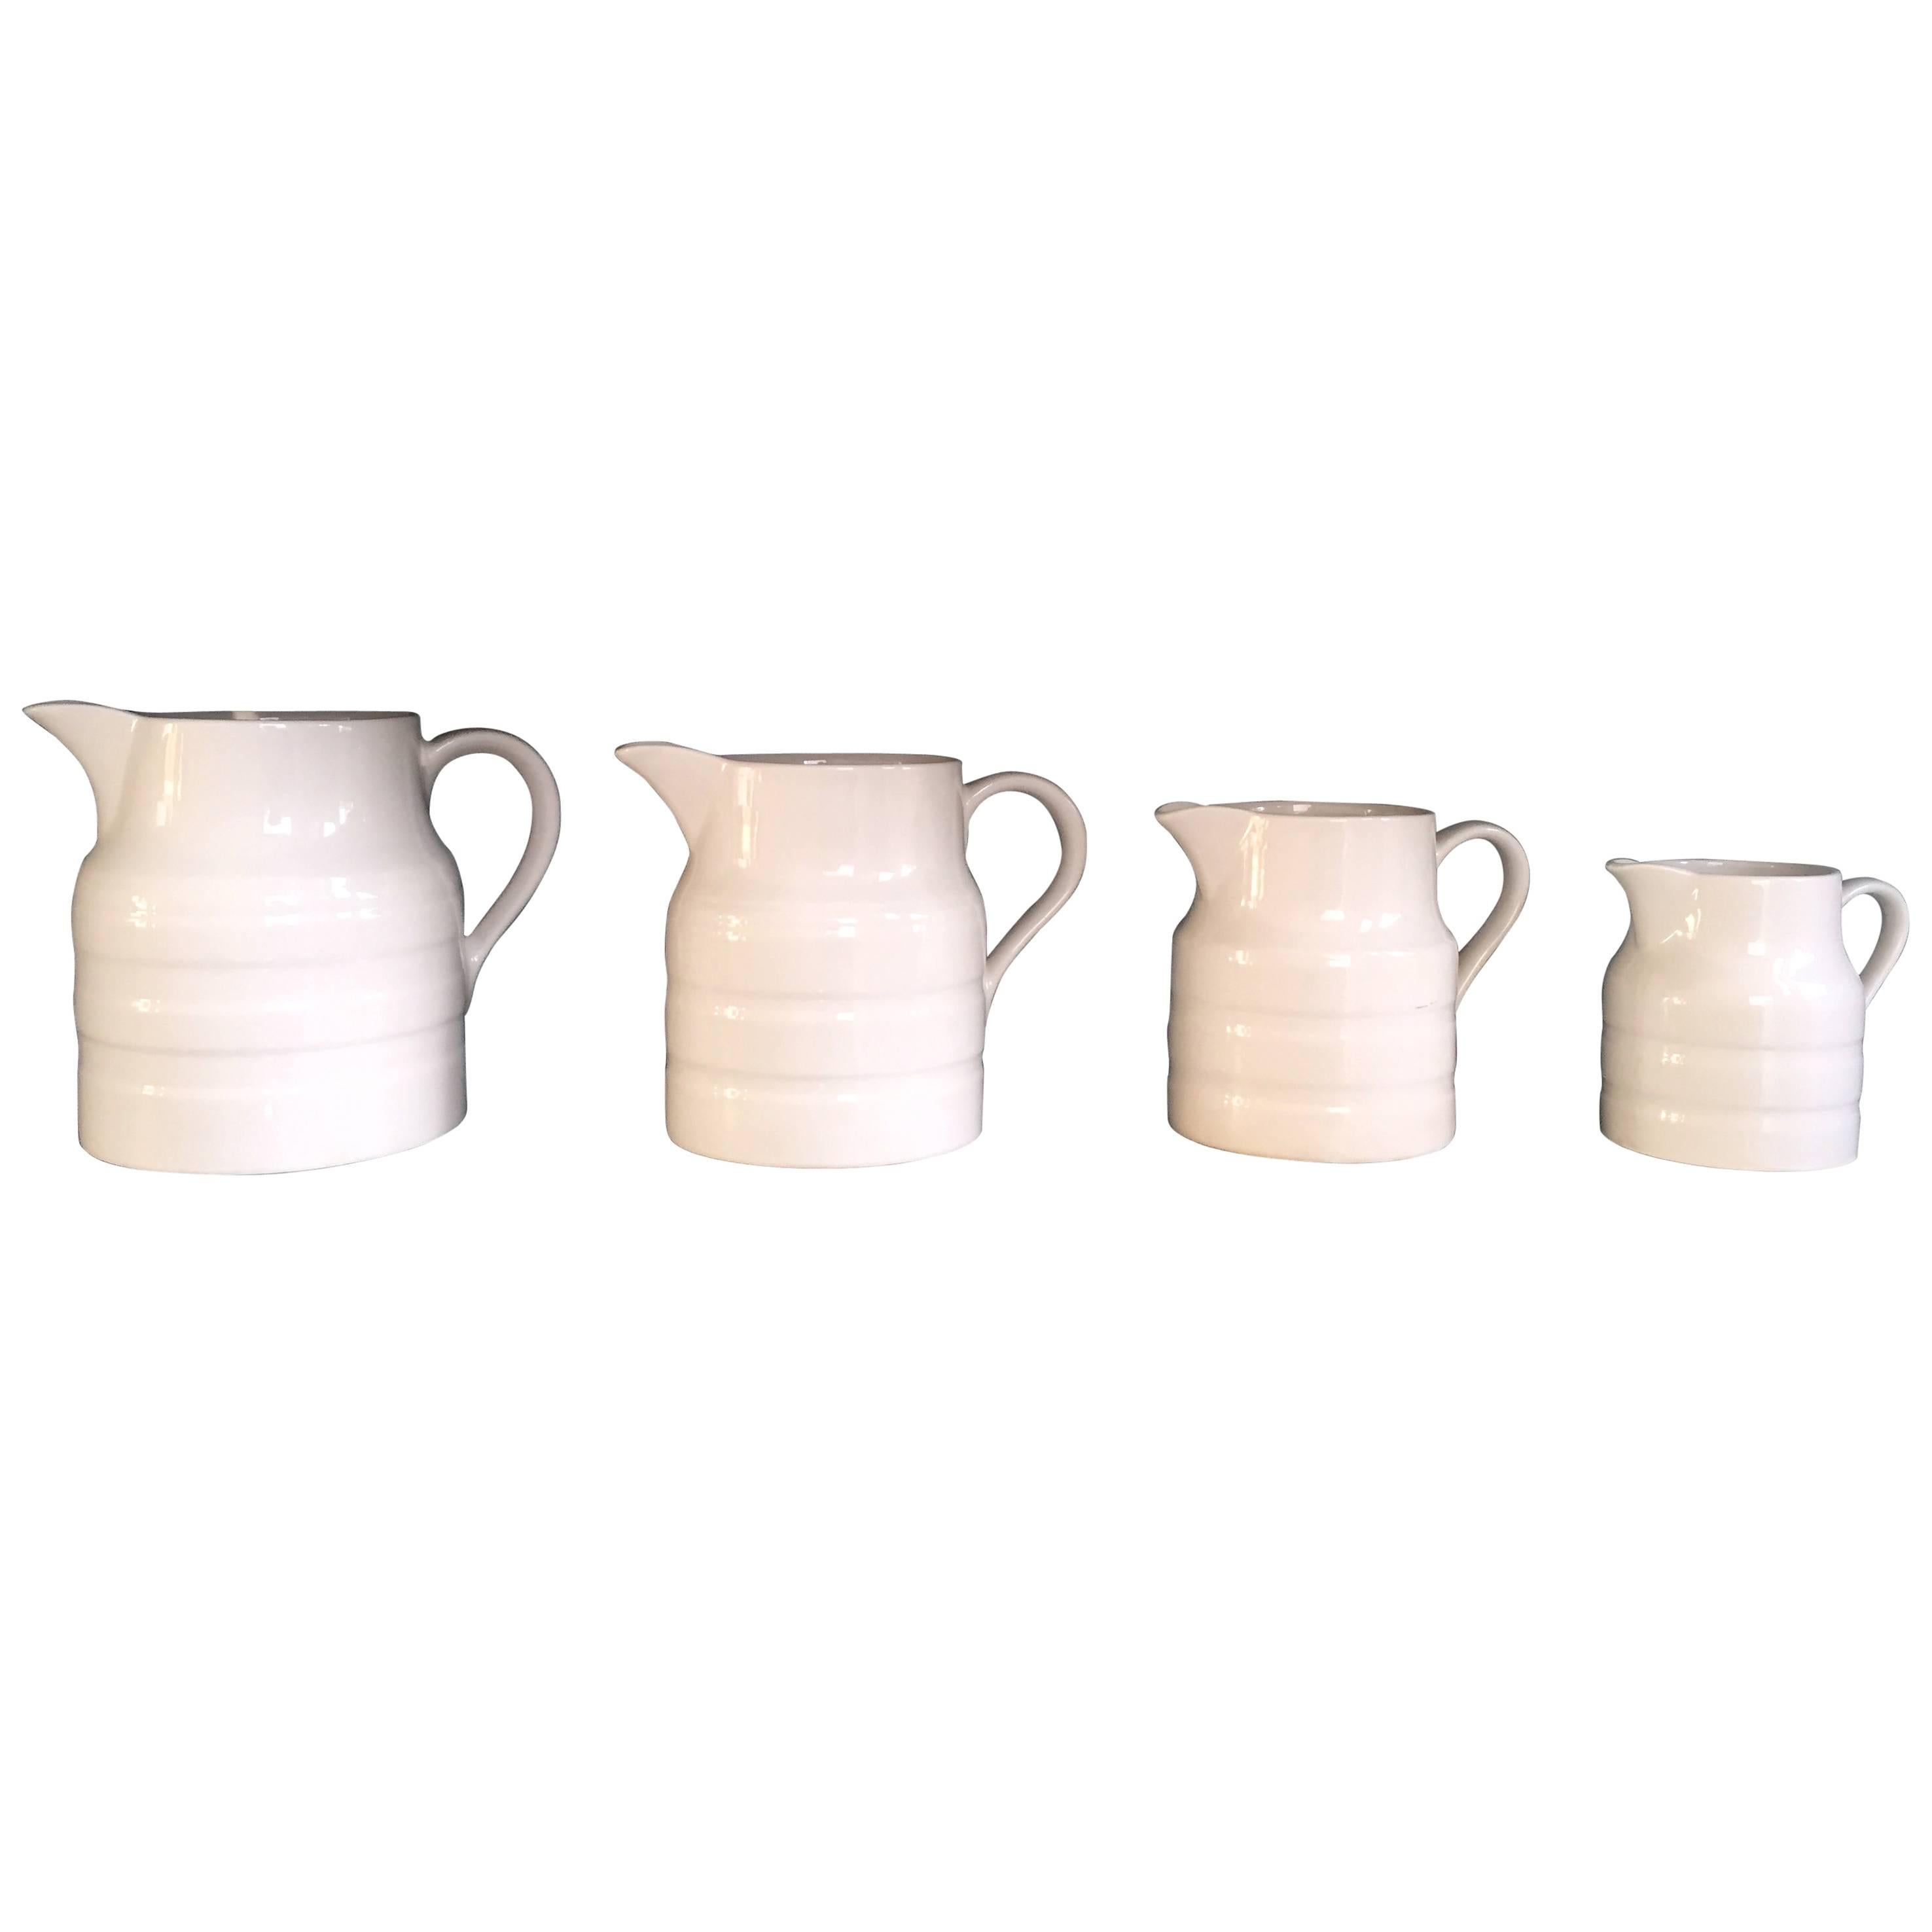 English White Ware Ceramic Milk Dairy Jugs